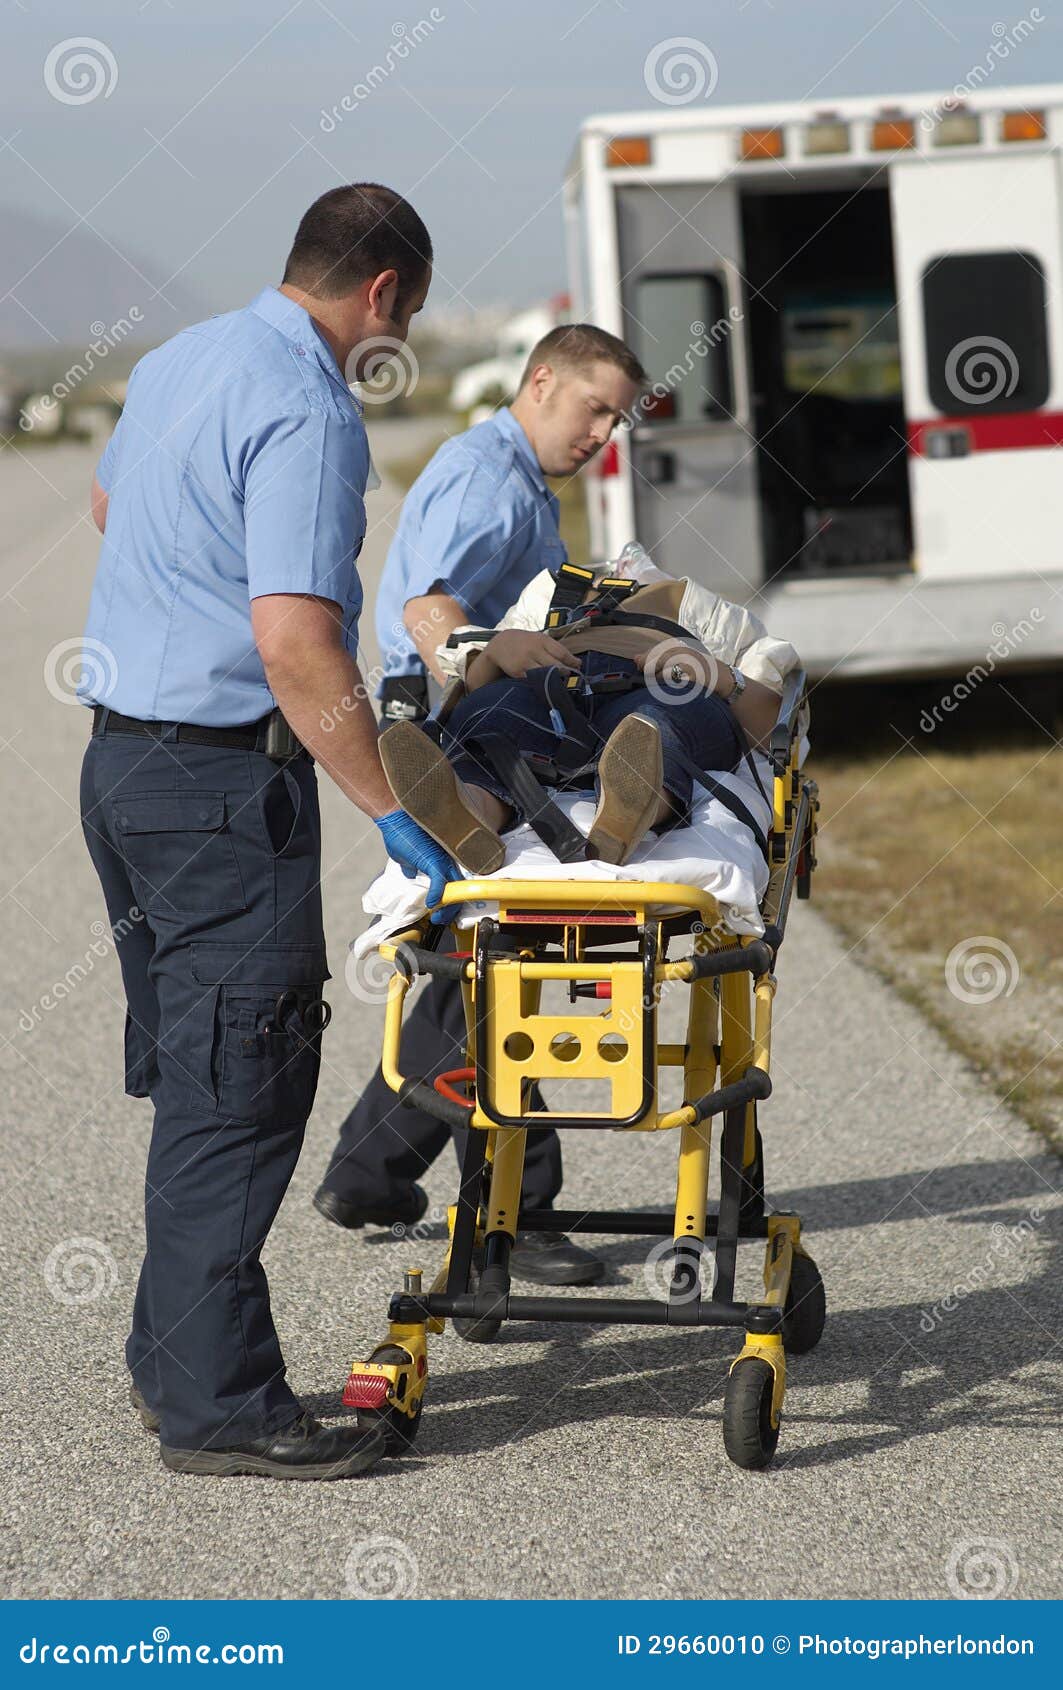 paramedics carrying victim on stretcher